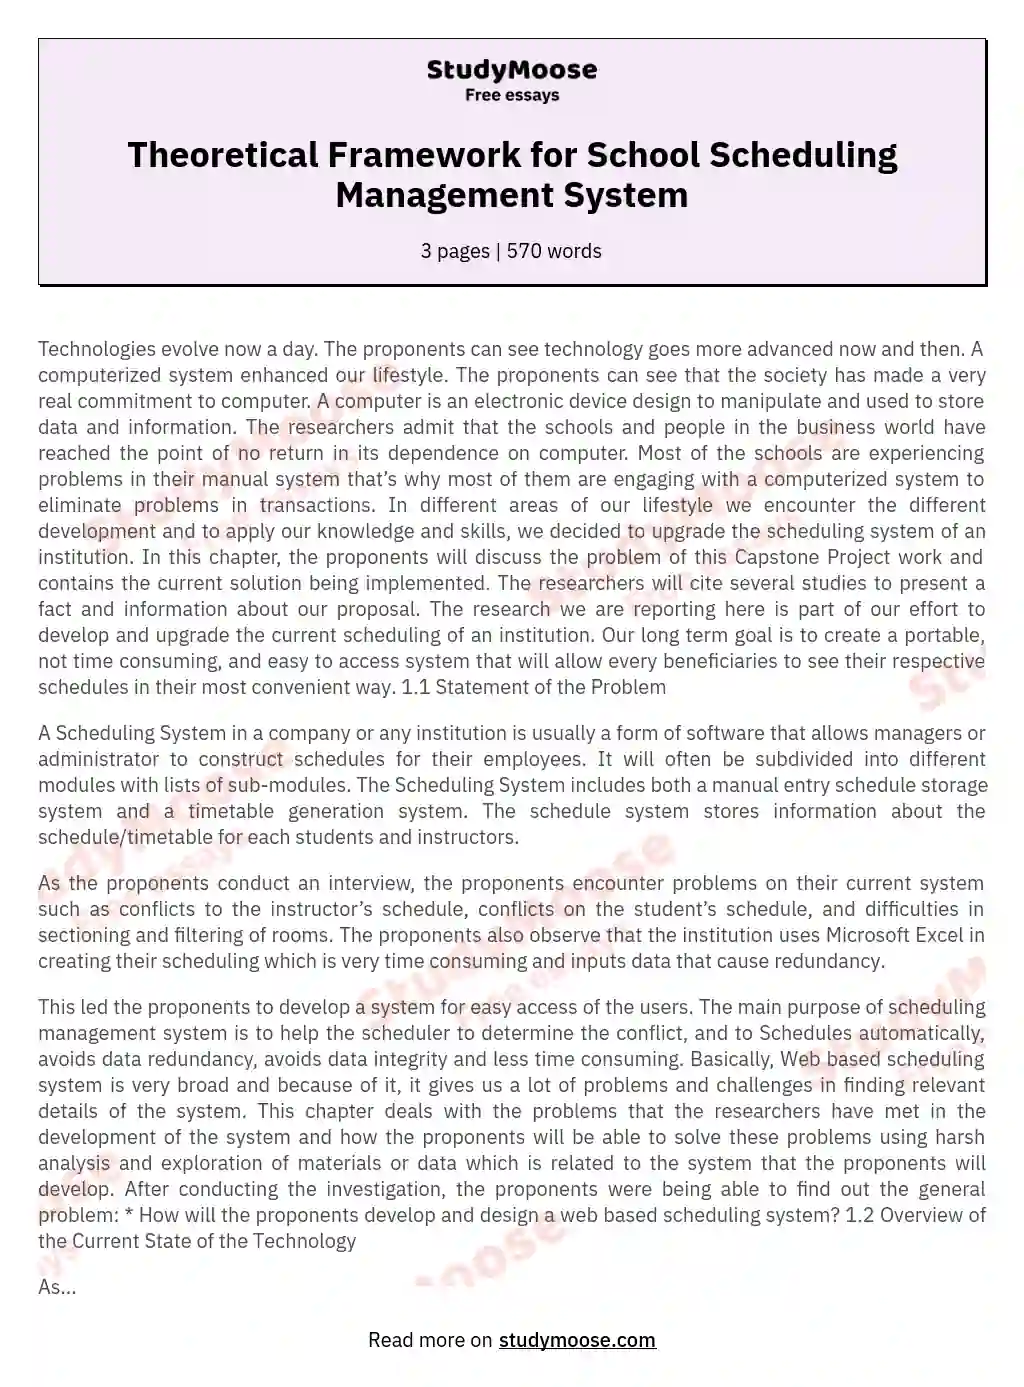 Theoretical Framework for School Scheduling Management System essay